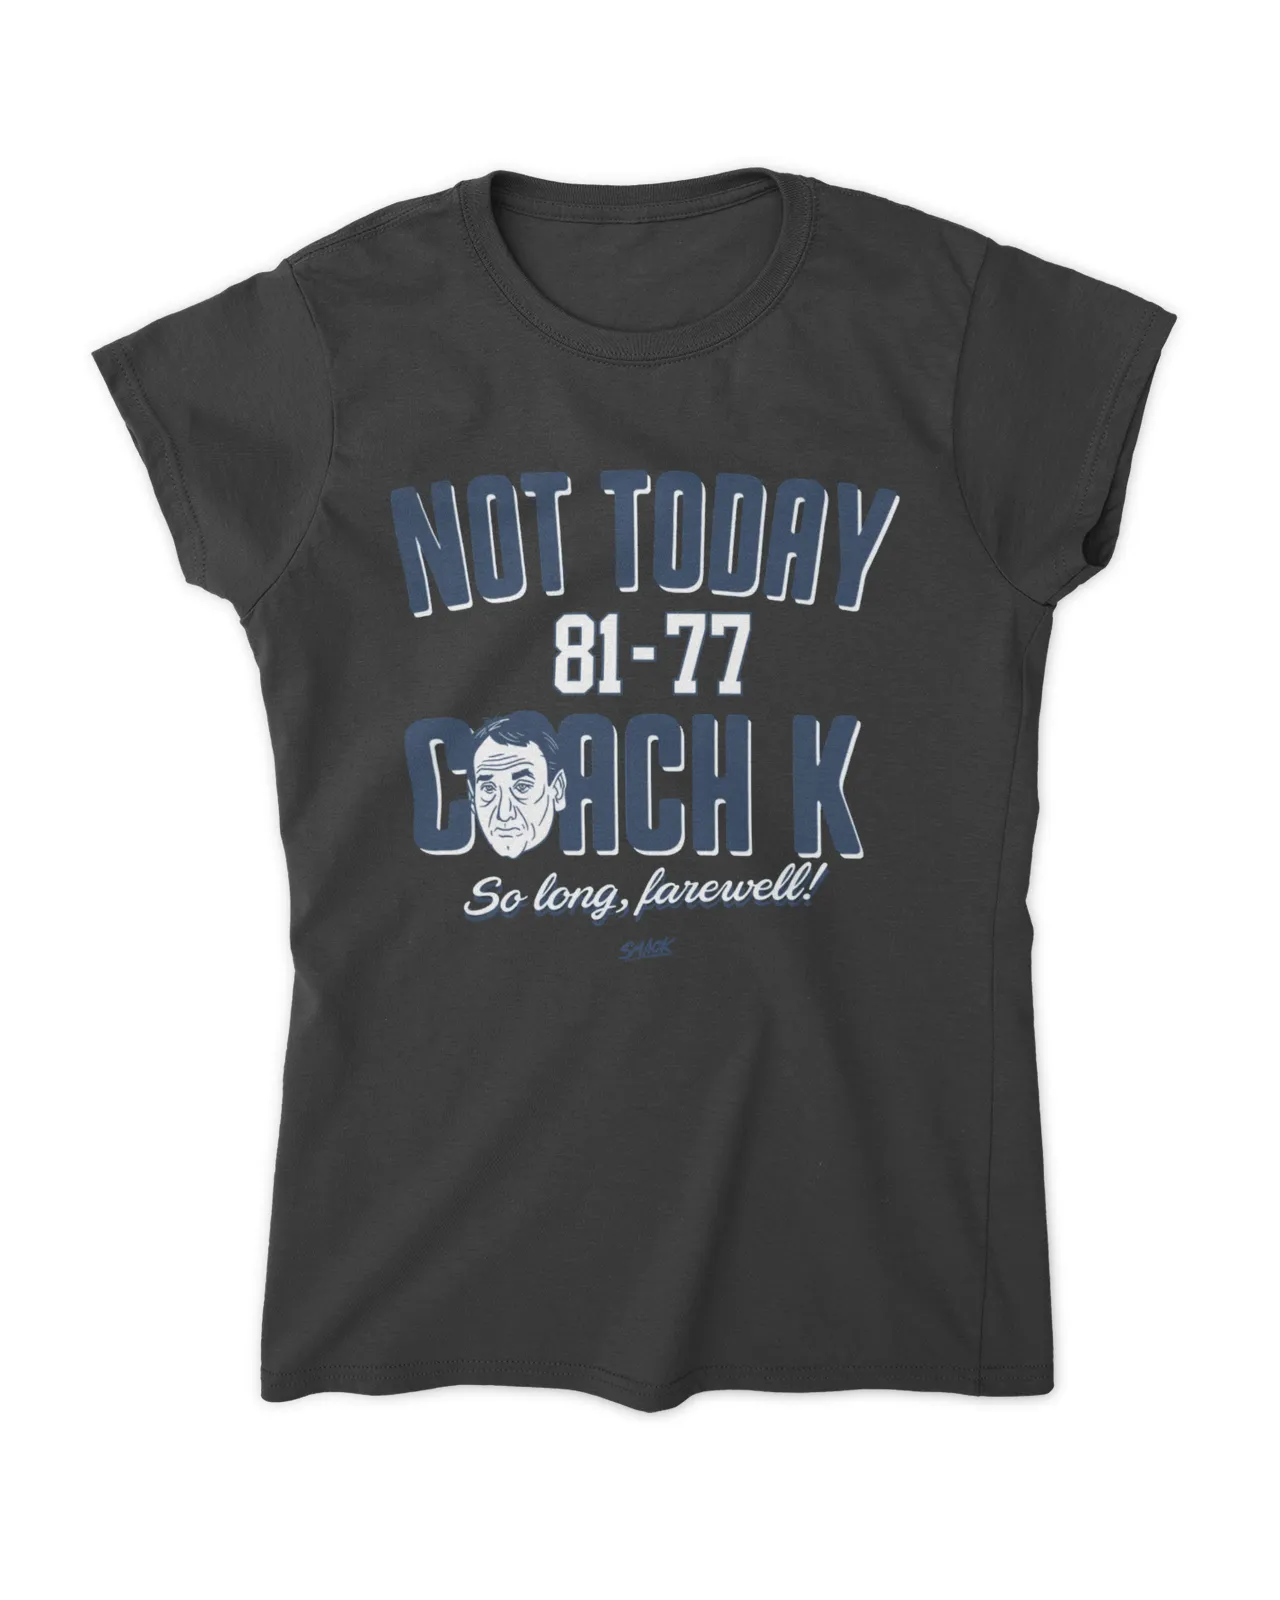 Not Today 81-77 Coach K Shirt